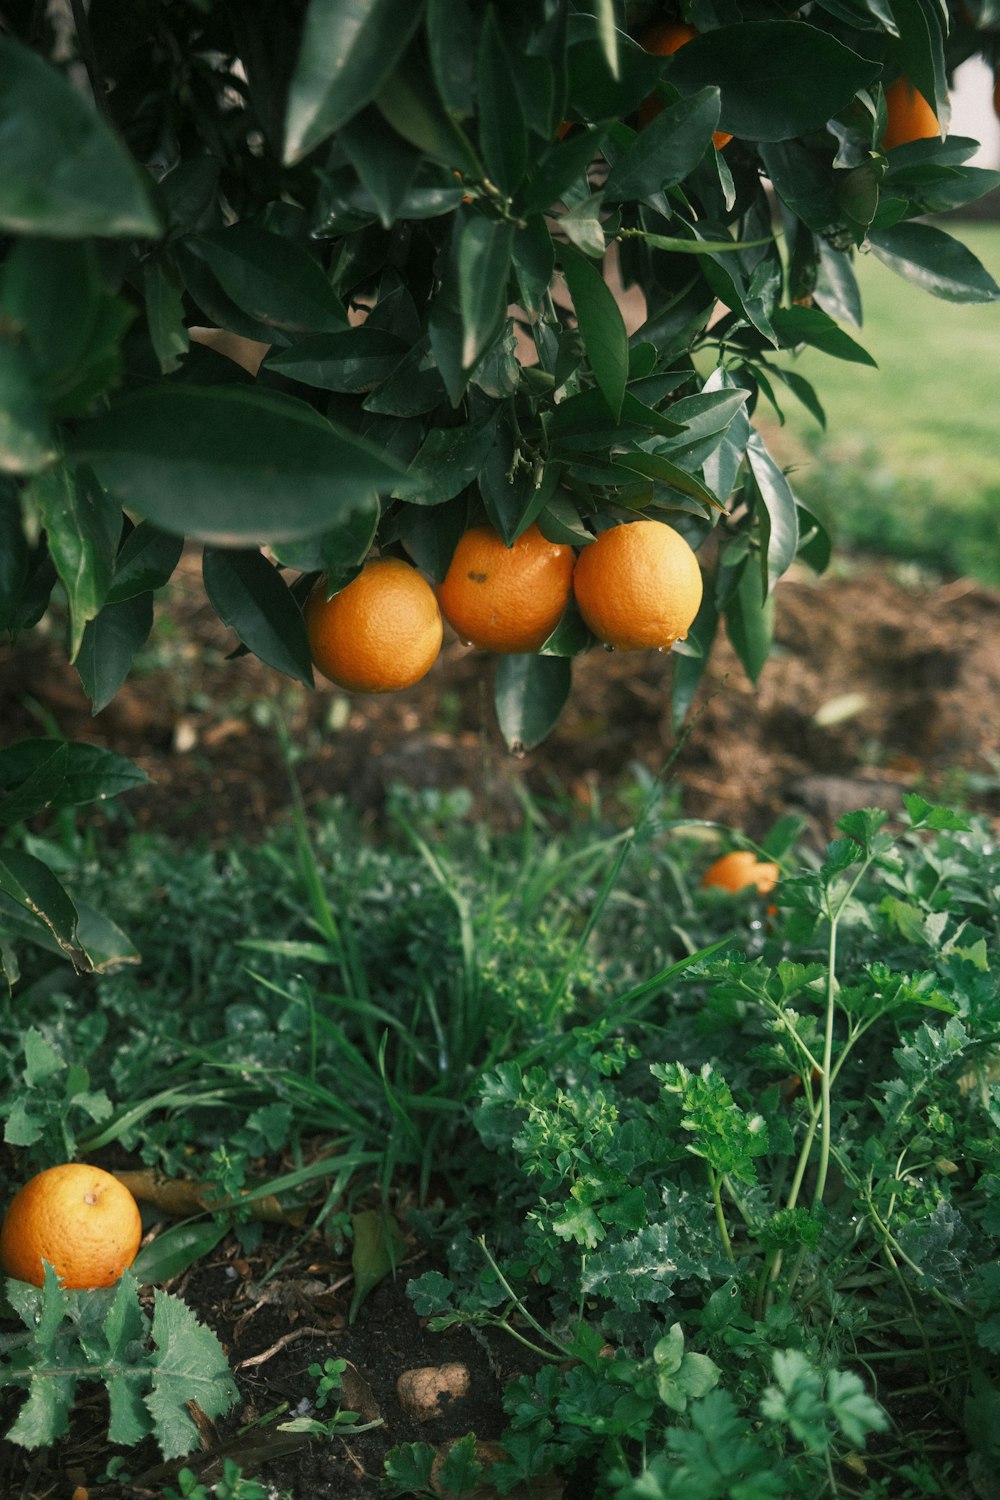 orange fruits on green grass during daytime